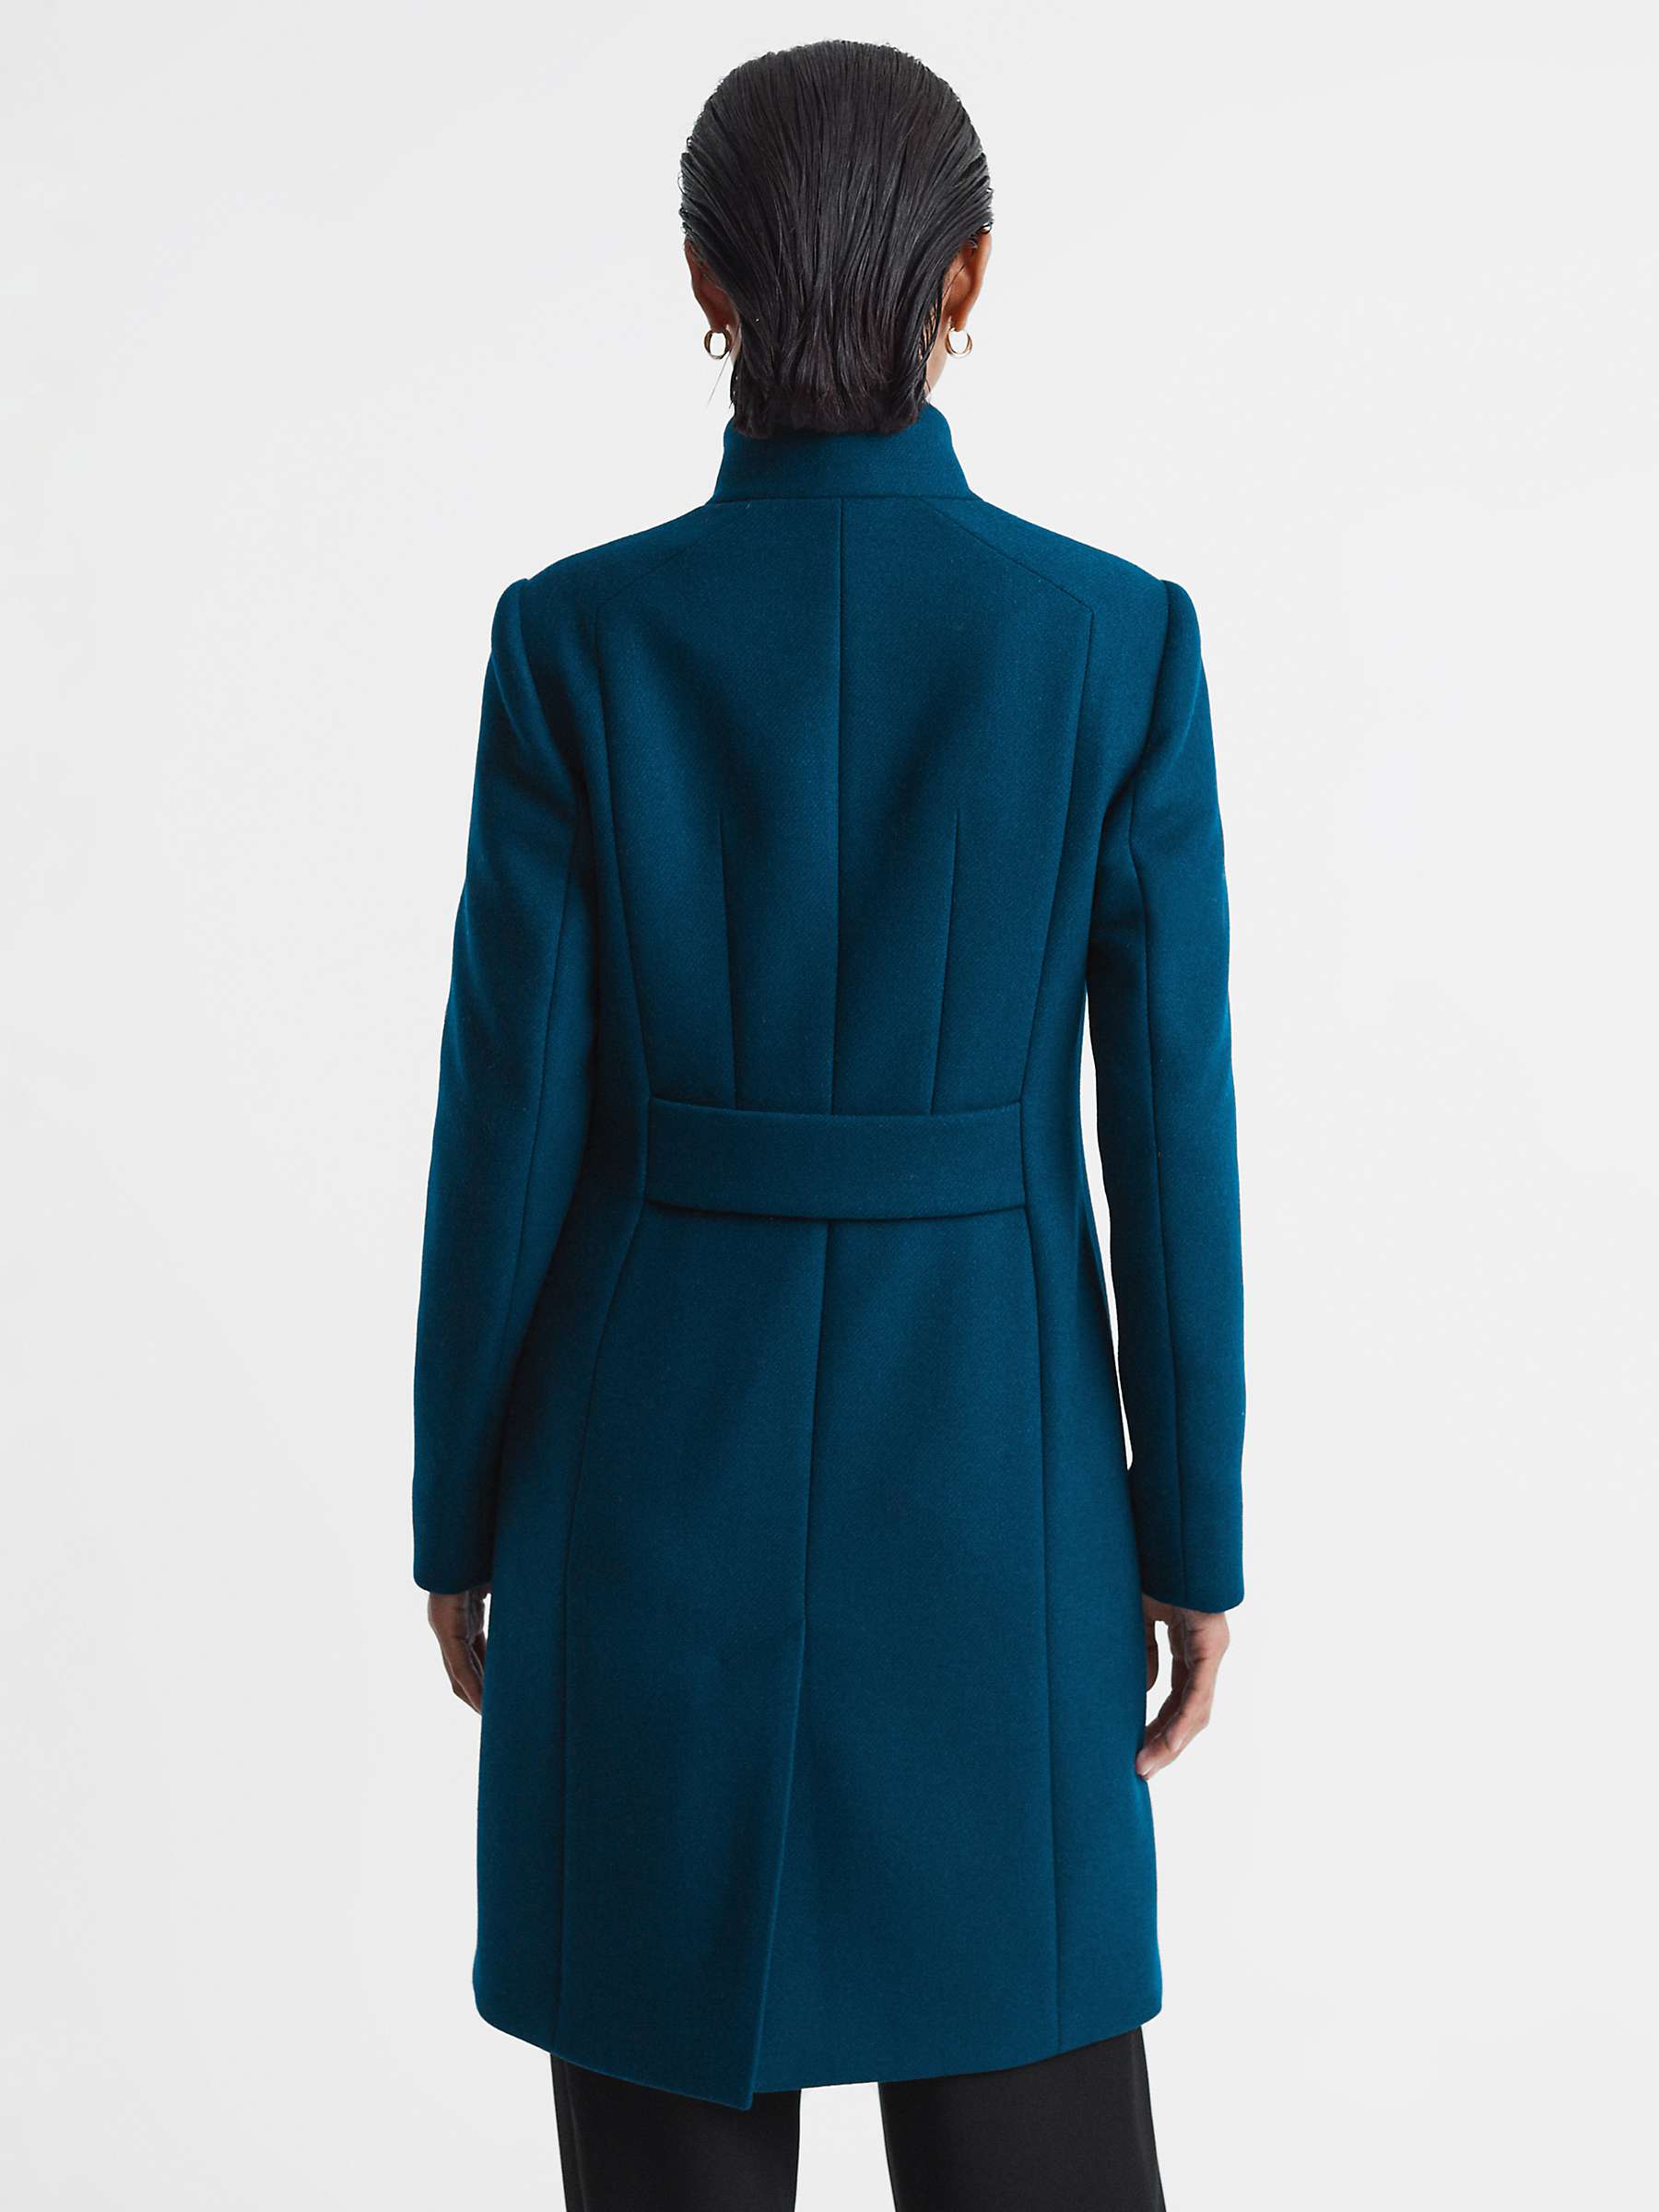 Buy Reiss Mia Wool Blend Tailored Coat Online at johnlewis.com